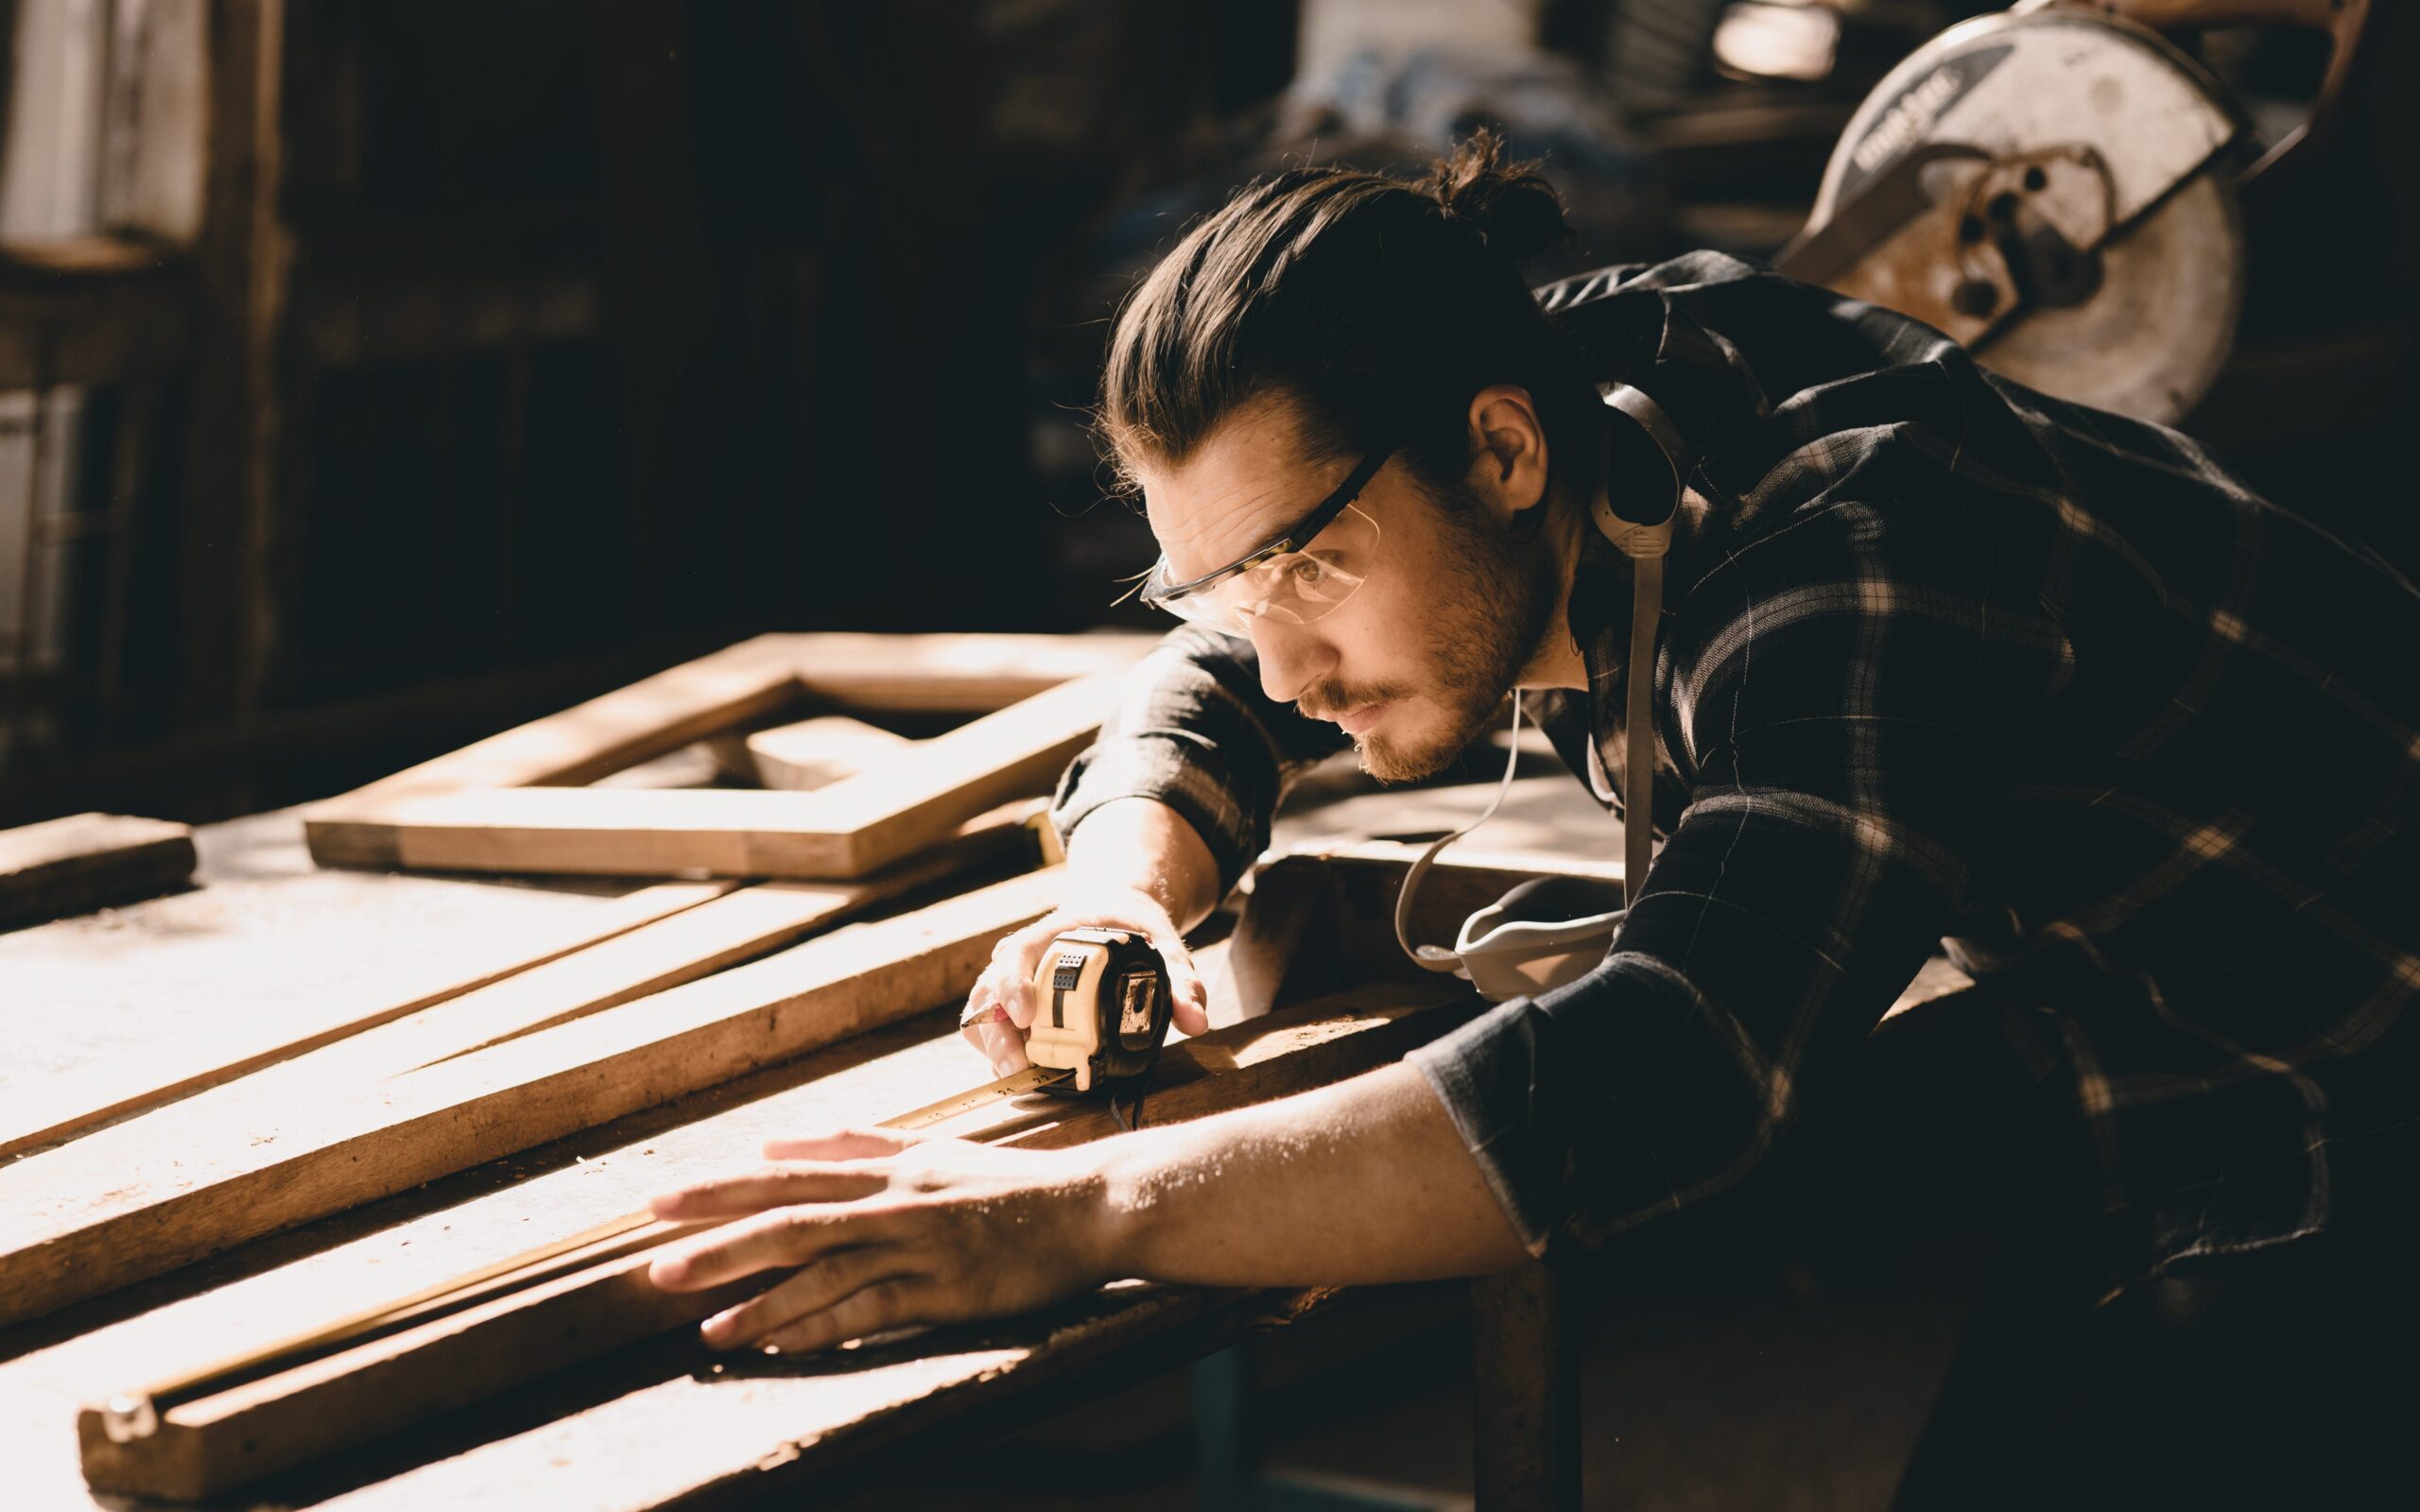 A carpenter measures a piece of wood.